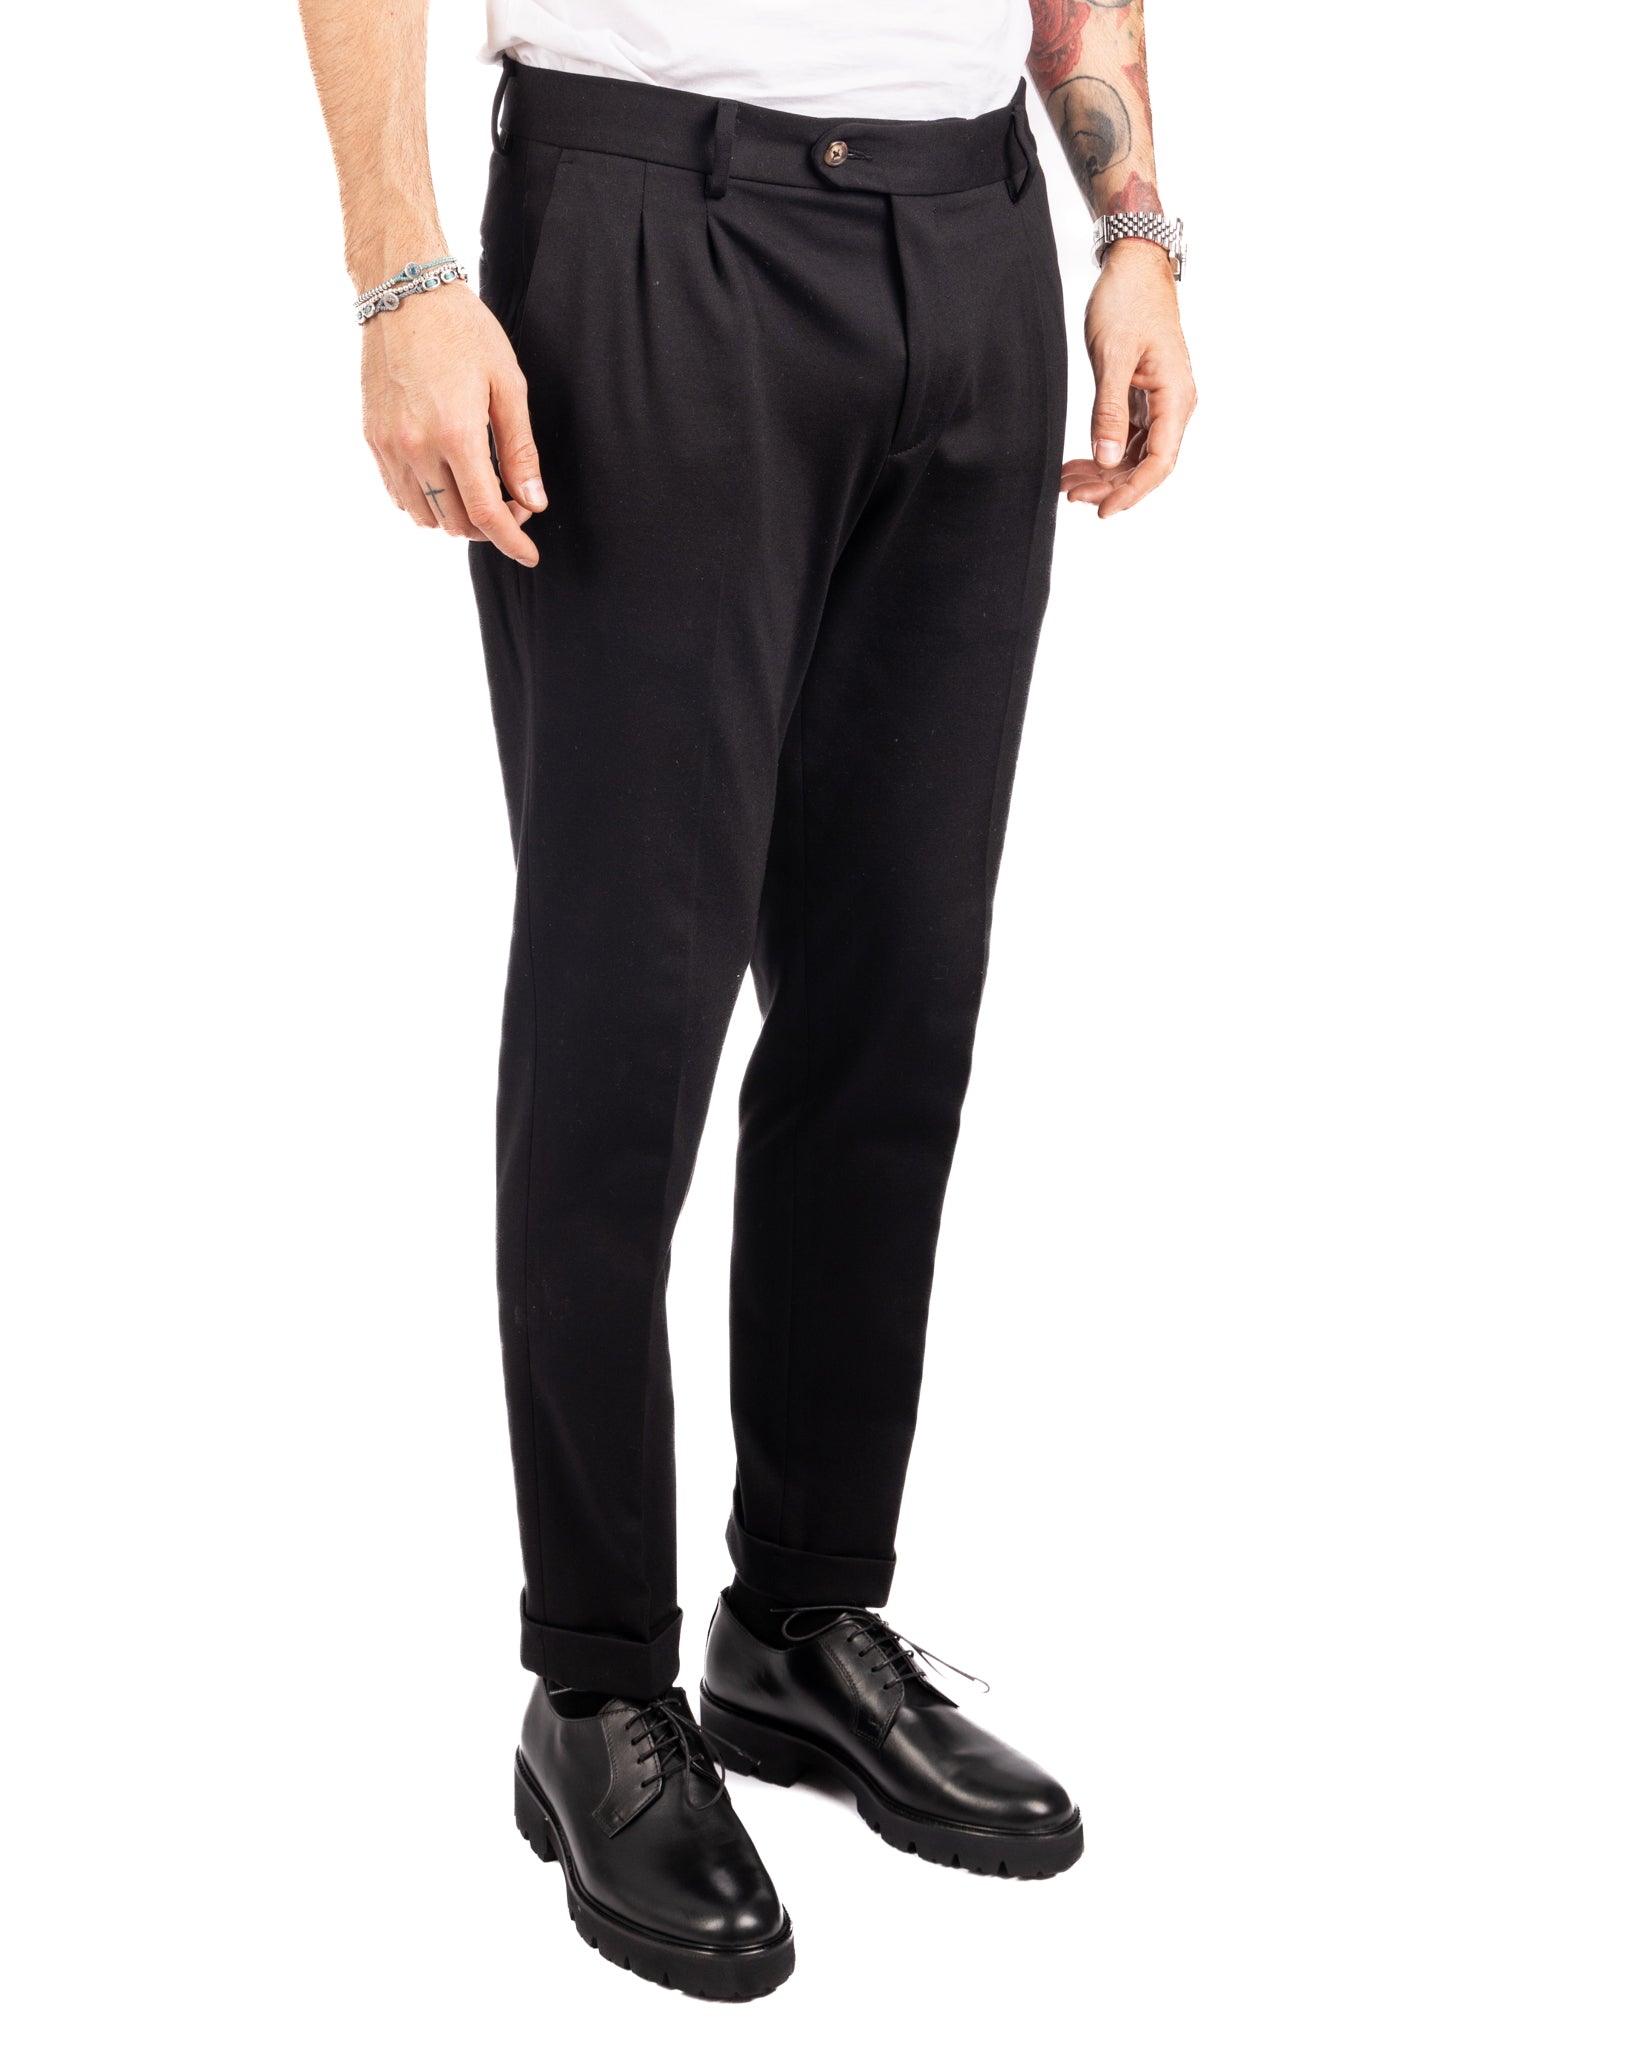 Thomas - pantalone due pinces nero in punto milano